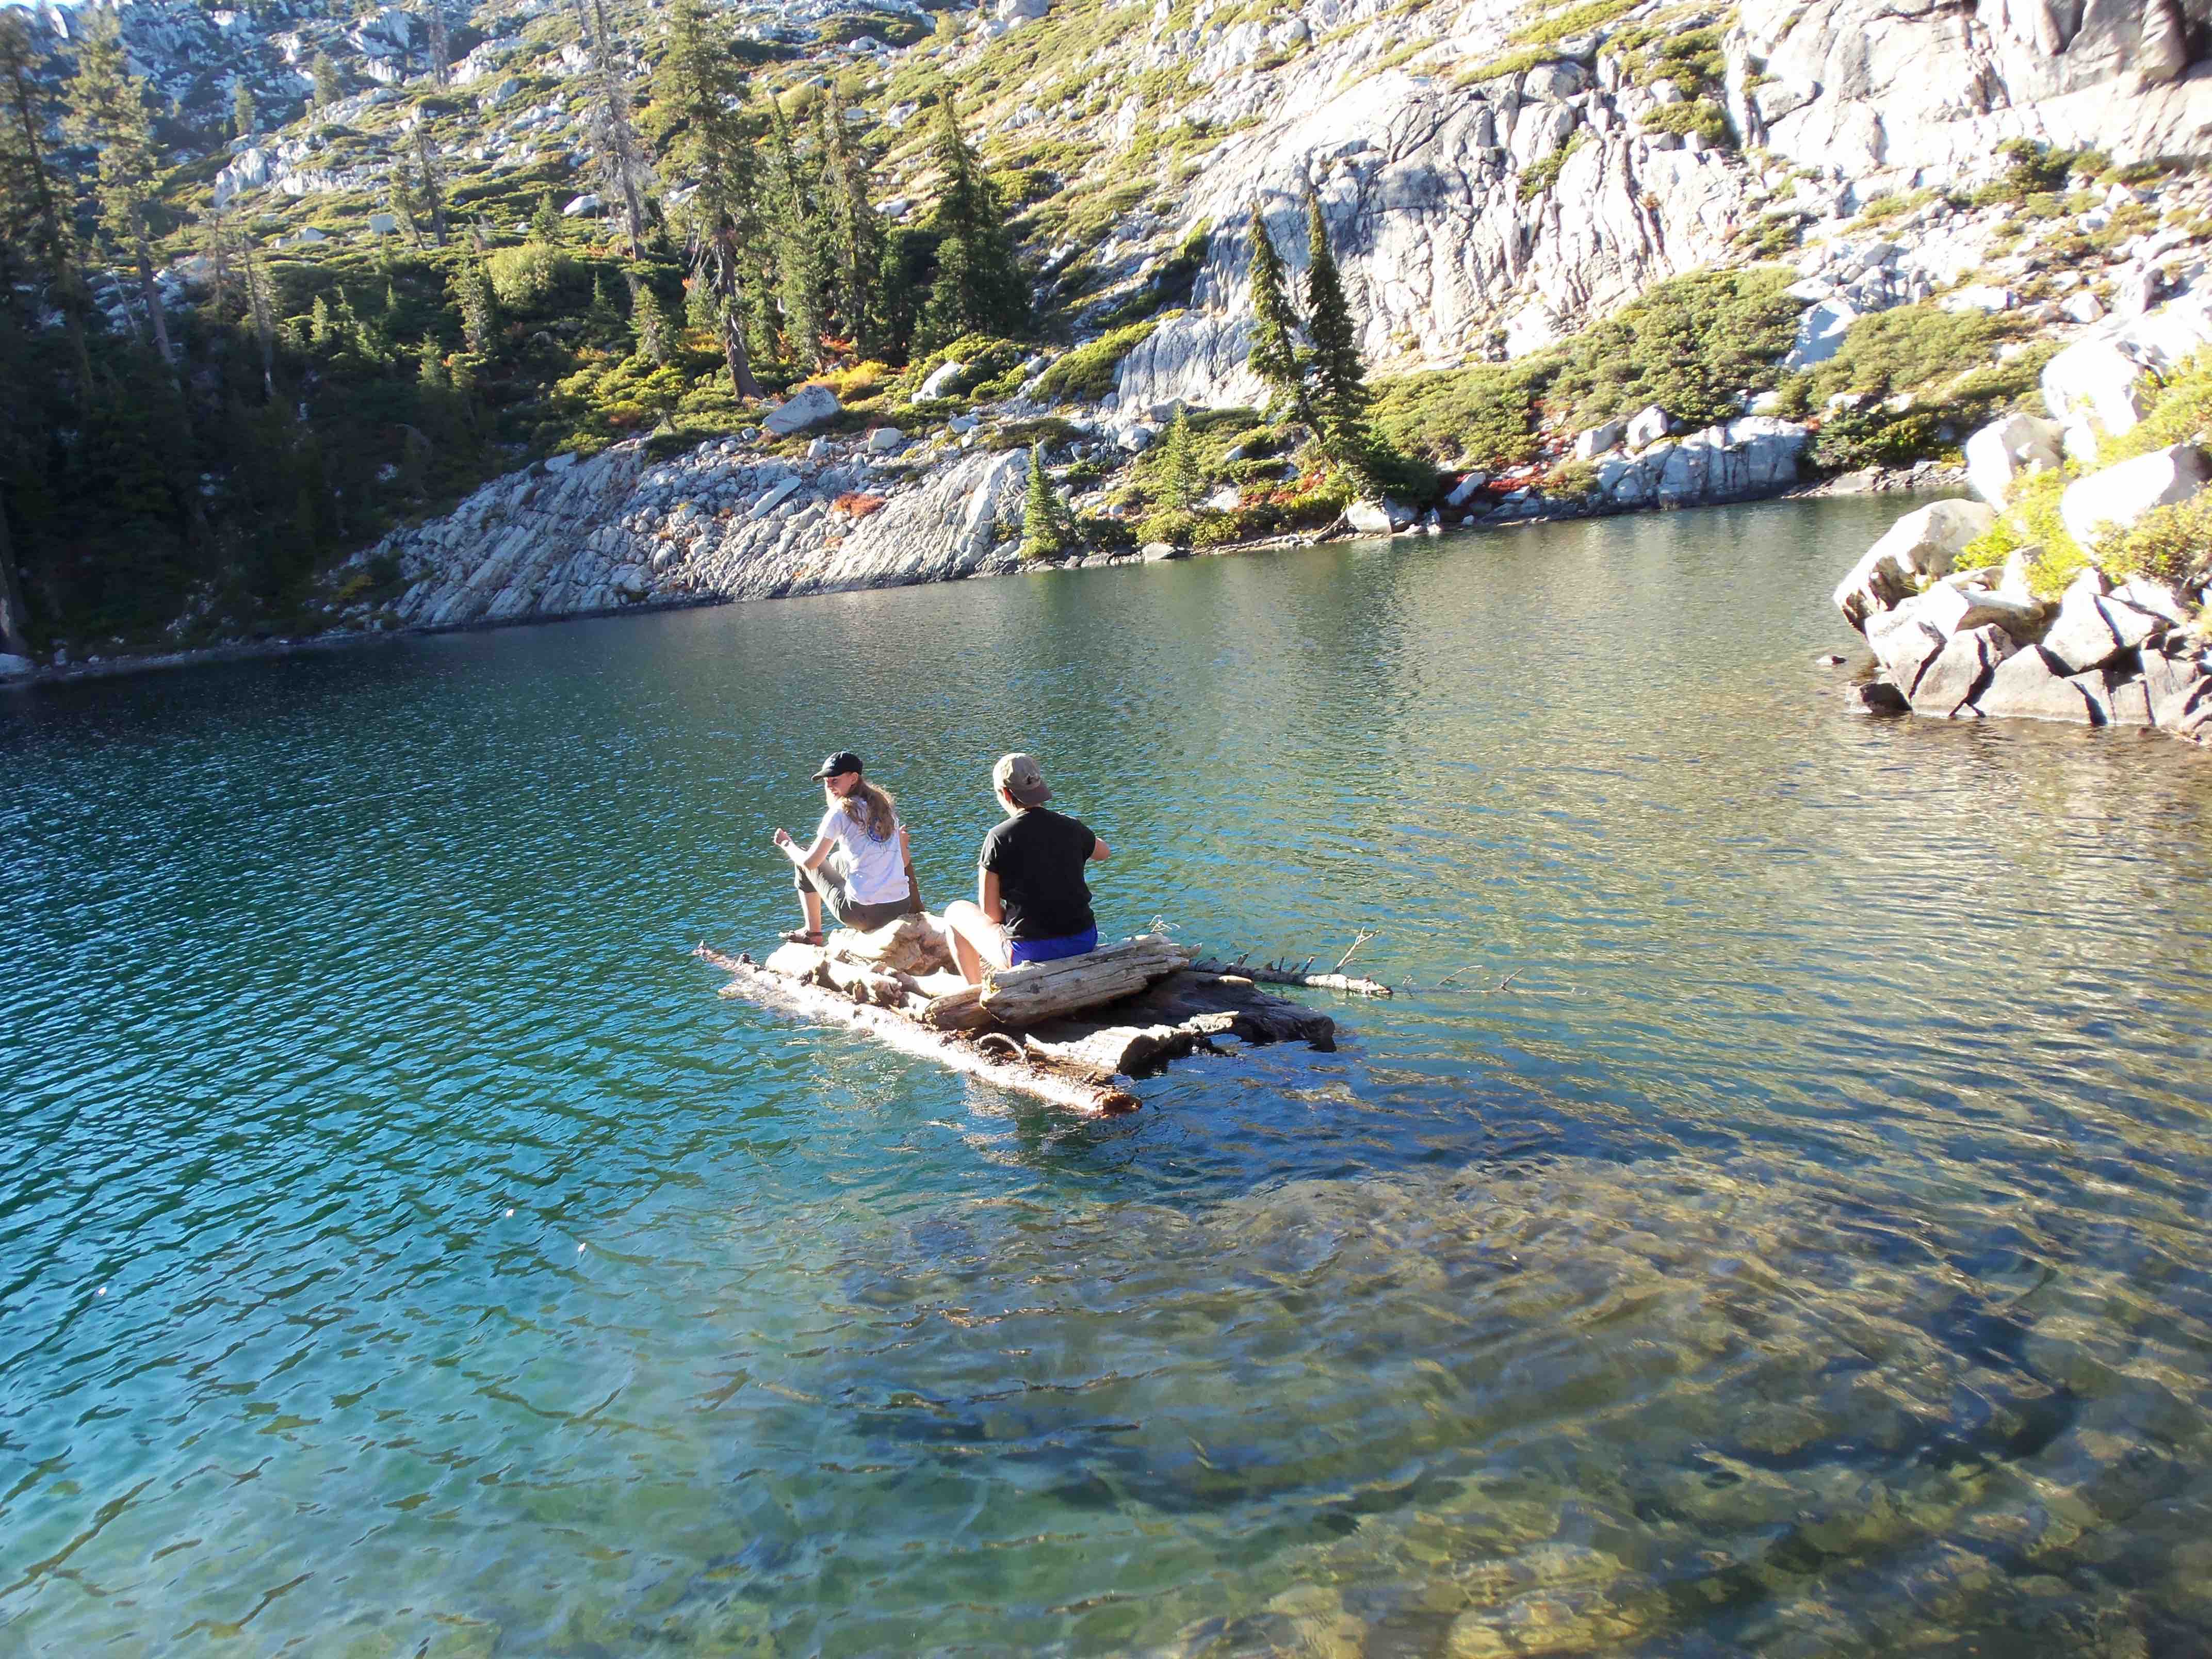 Belmont Oregon studnets ride on man made log boat on clear lake